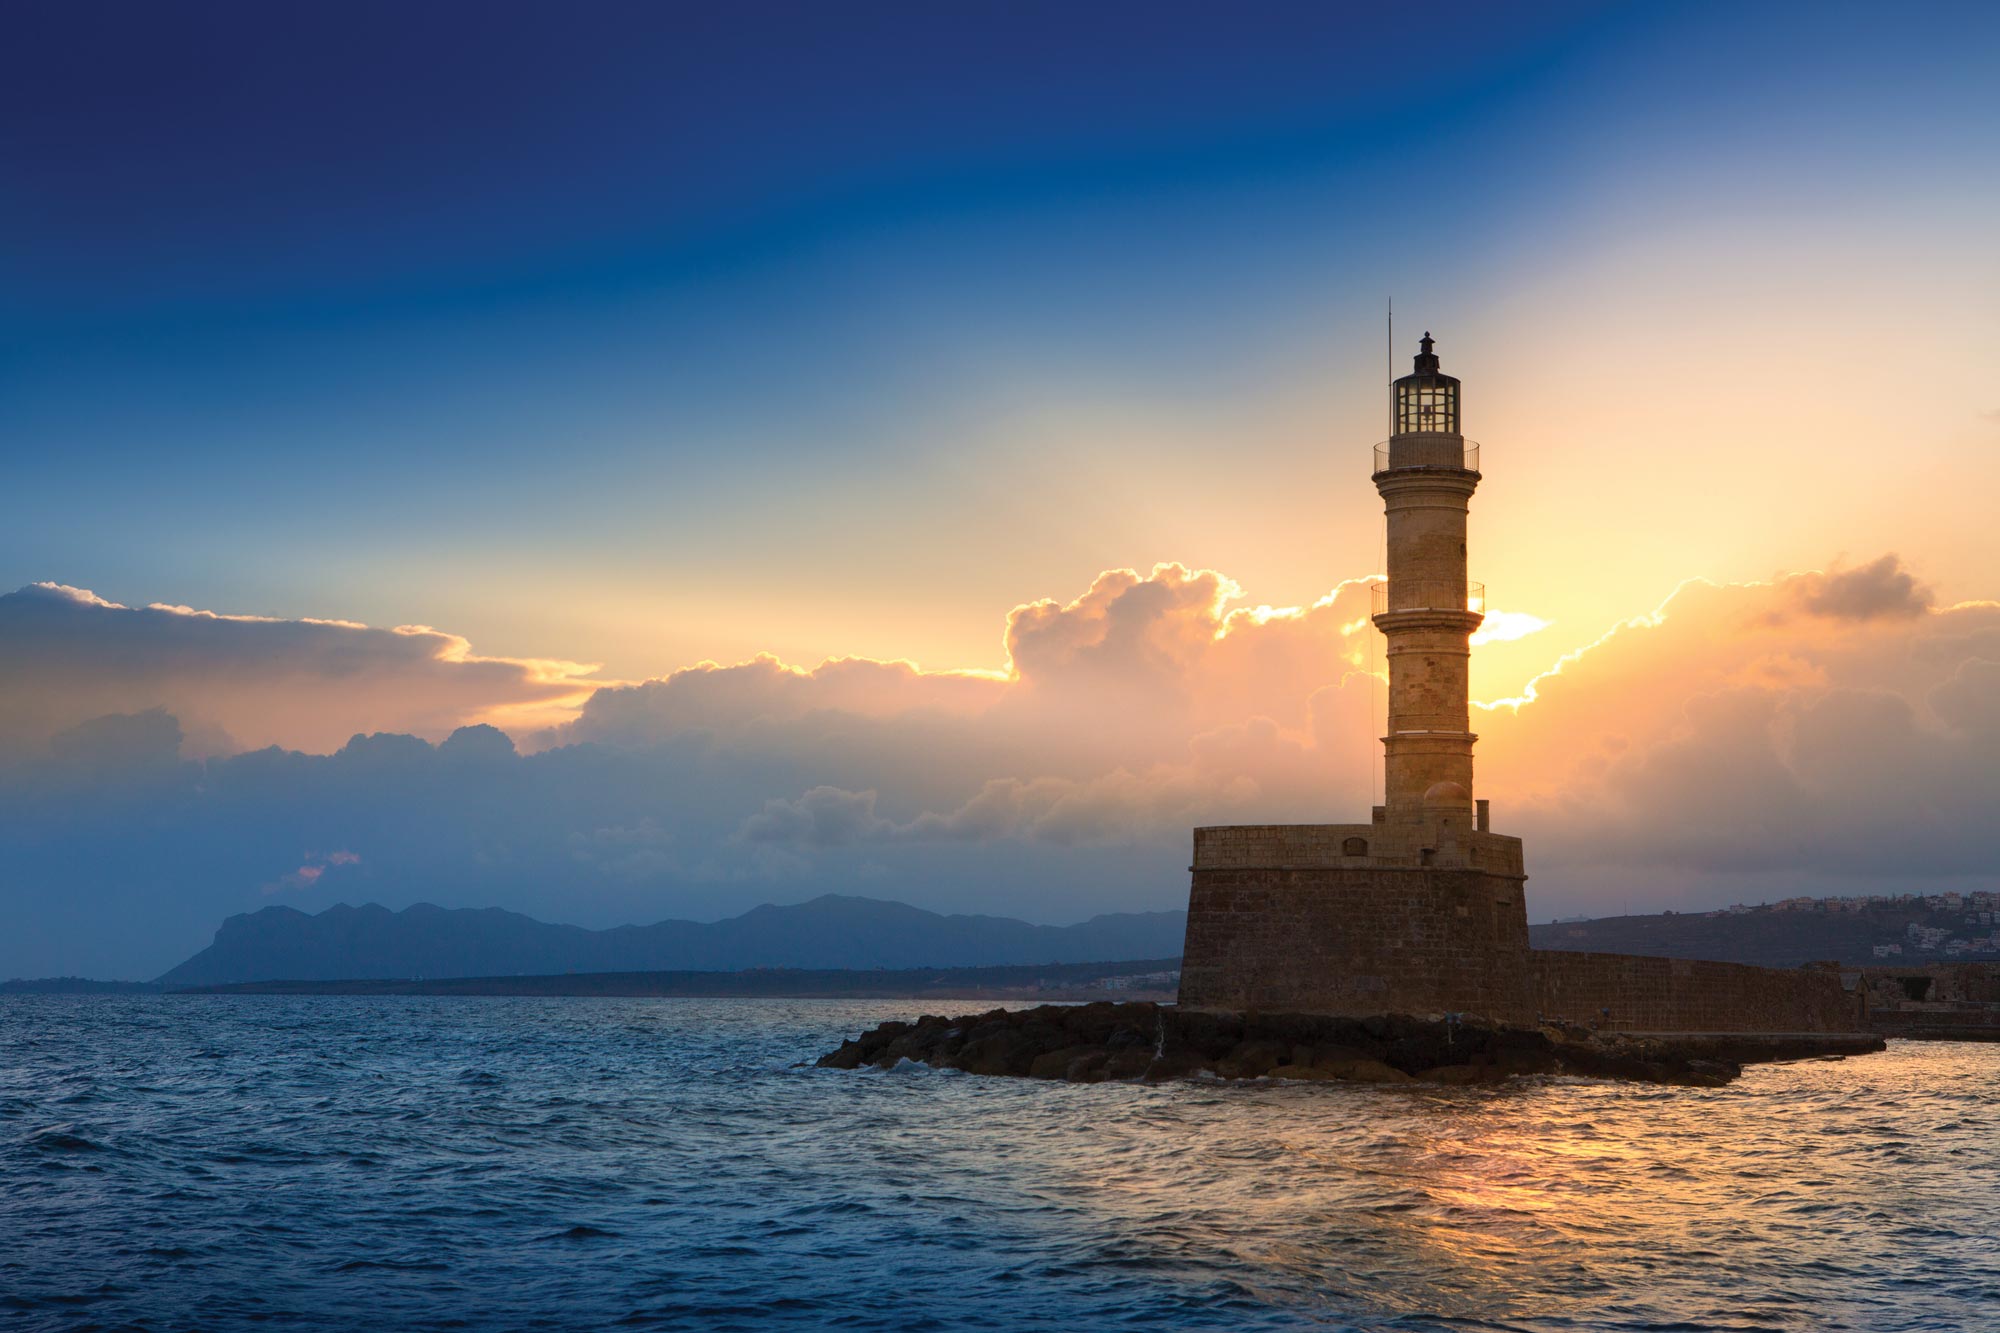 The sun sets behind a lighthouse